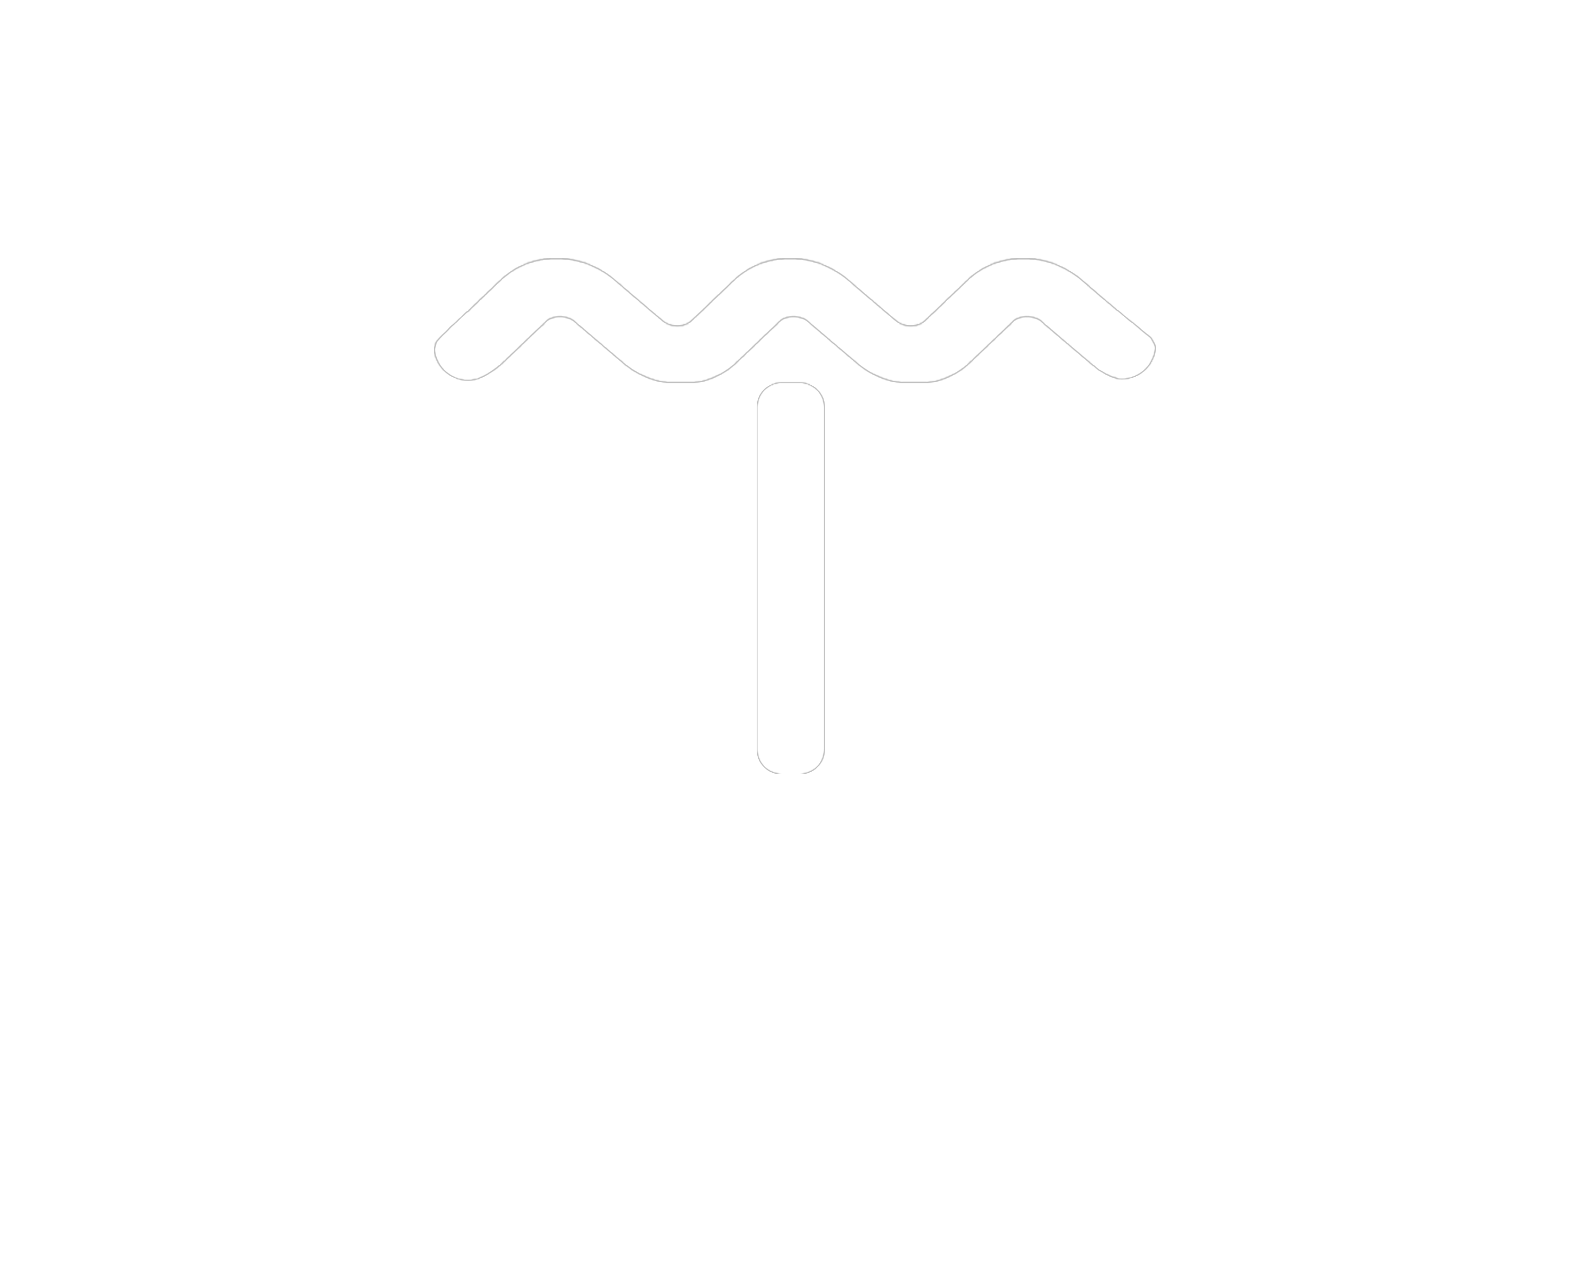 Texas Trail Boss logo